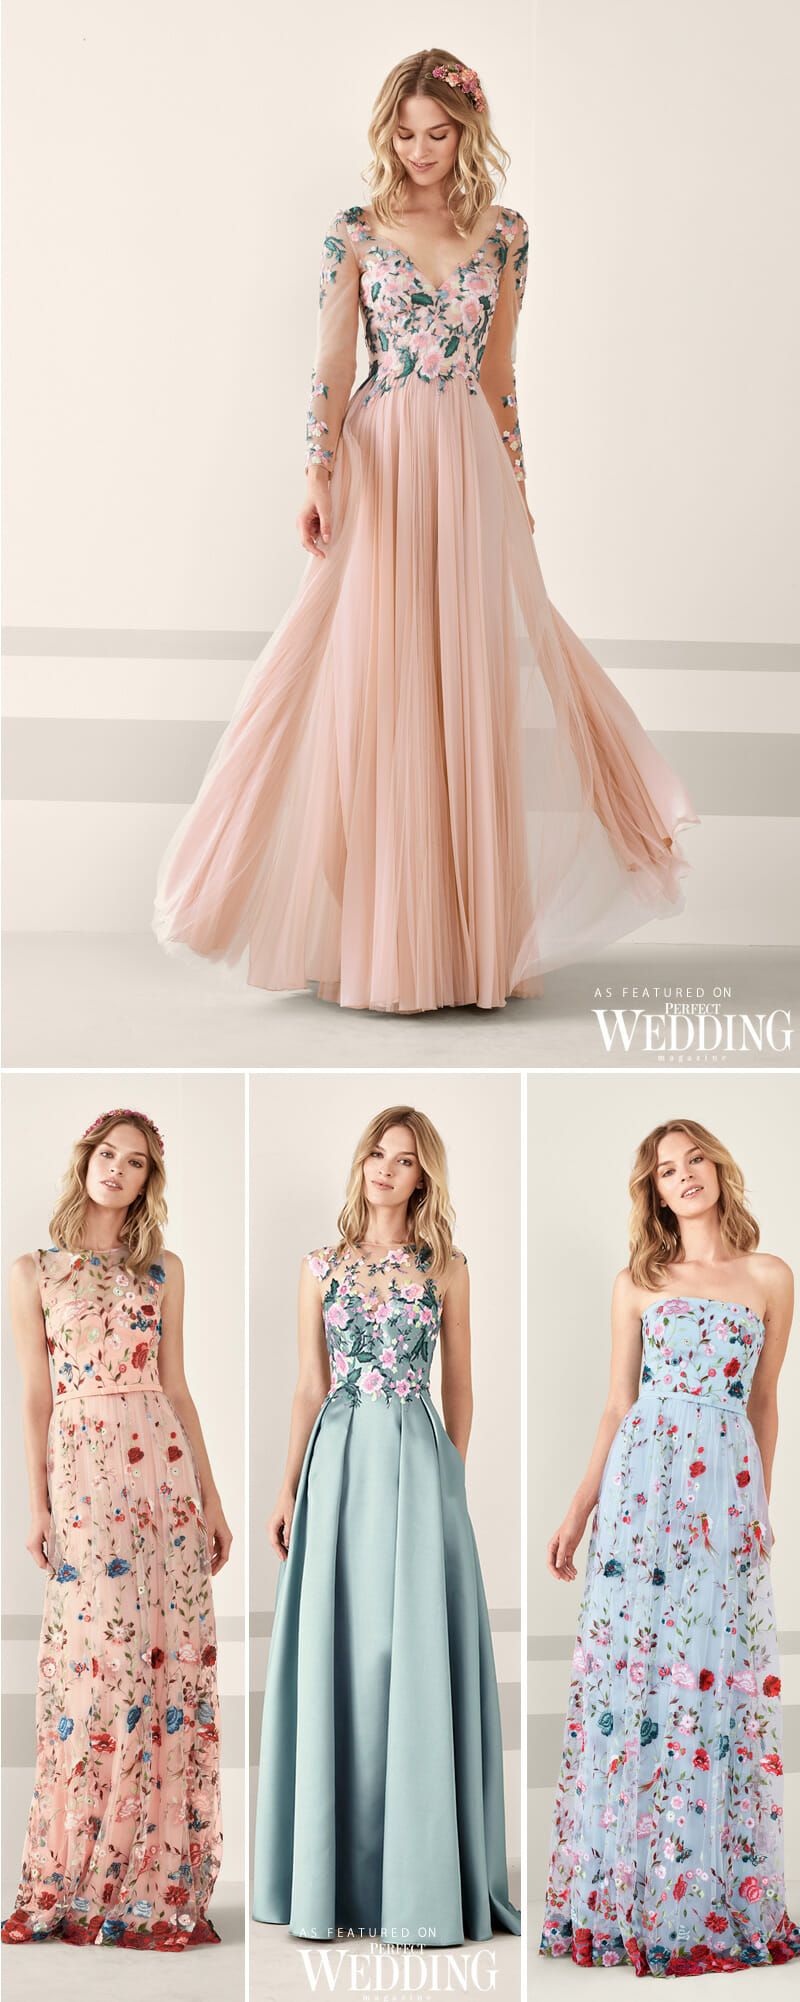 Pronovias, Pronovias Cocktail Dresses, Cocktail Dresses, Pronovias Cocktail 2019, Summer Dresses, Perfect Wedding Magazine, Perfect Wedding Blog